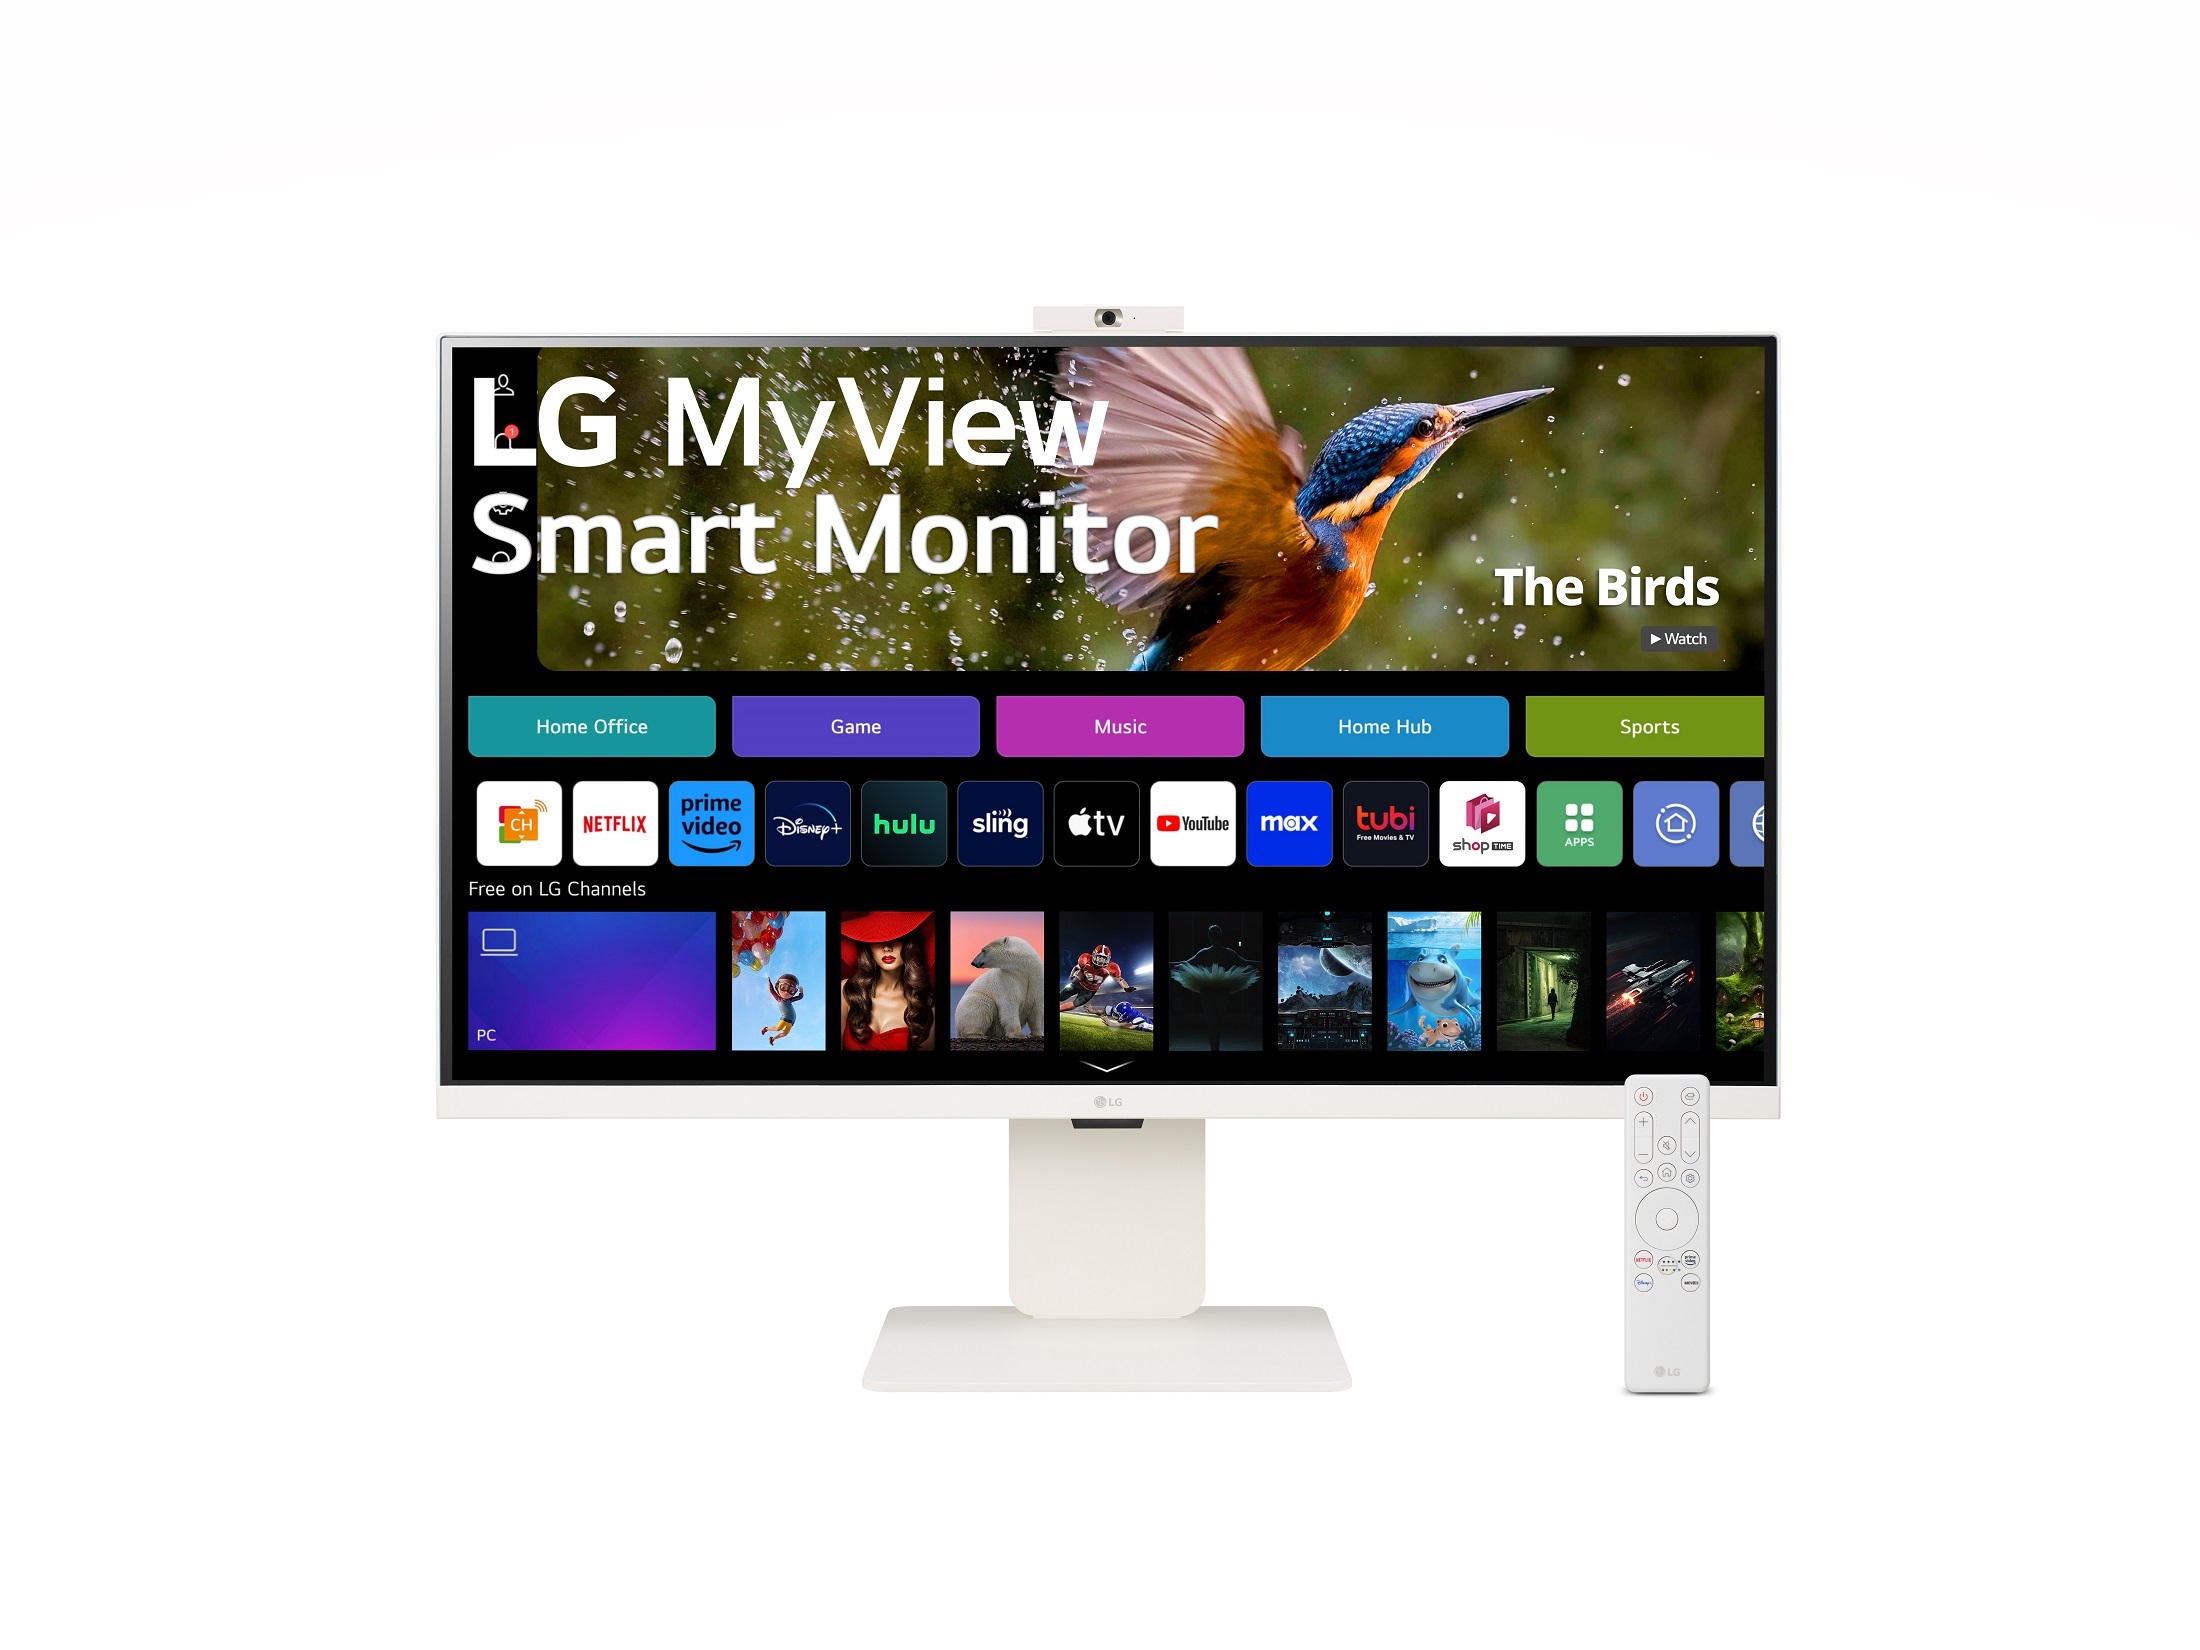 LG smart monitor